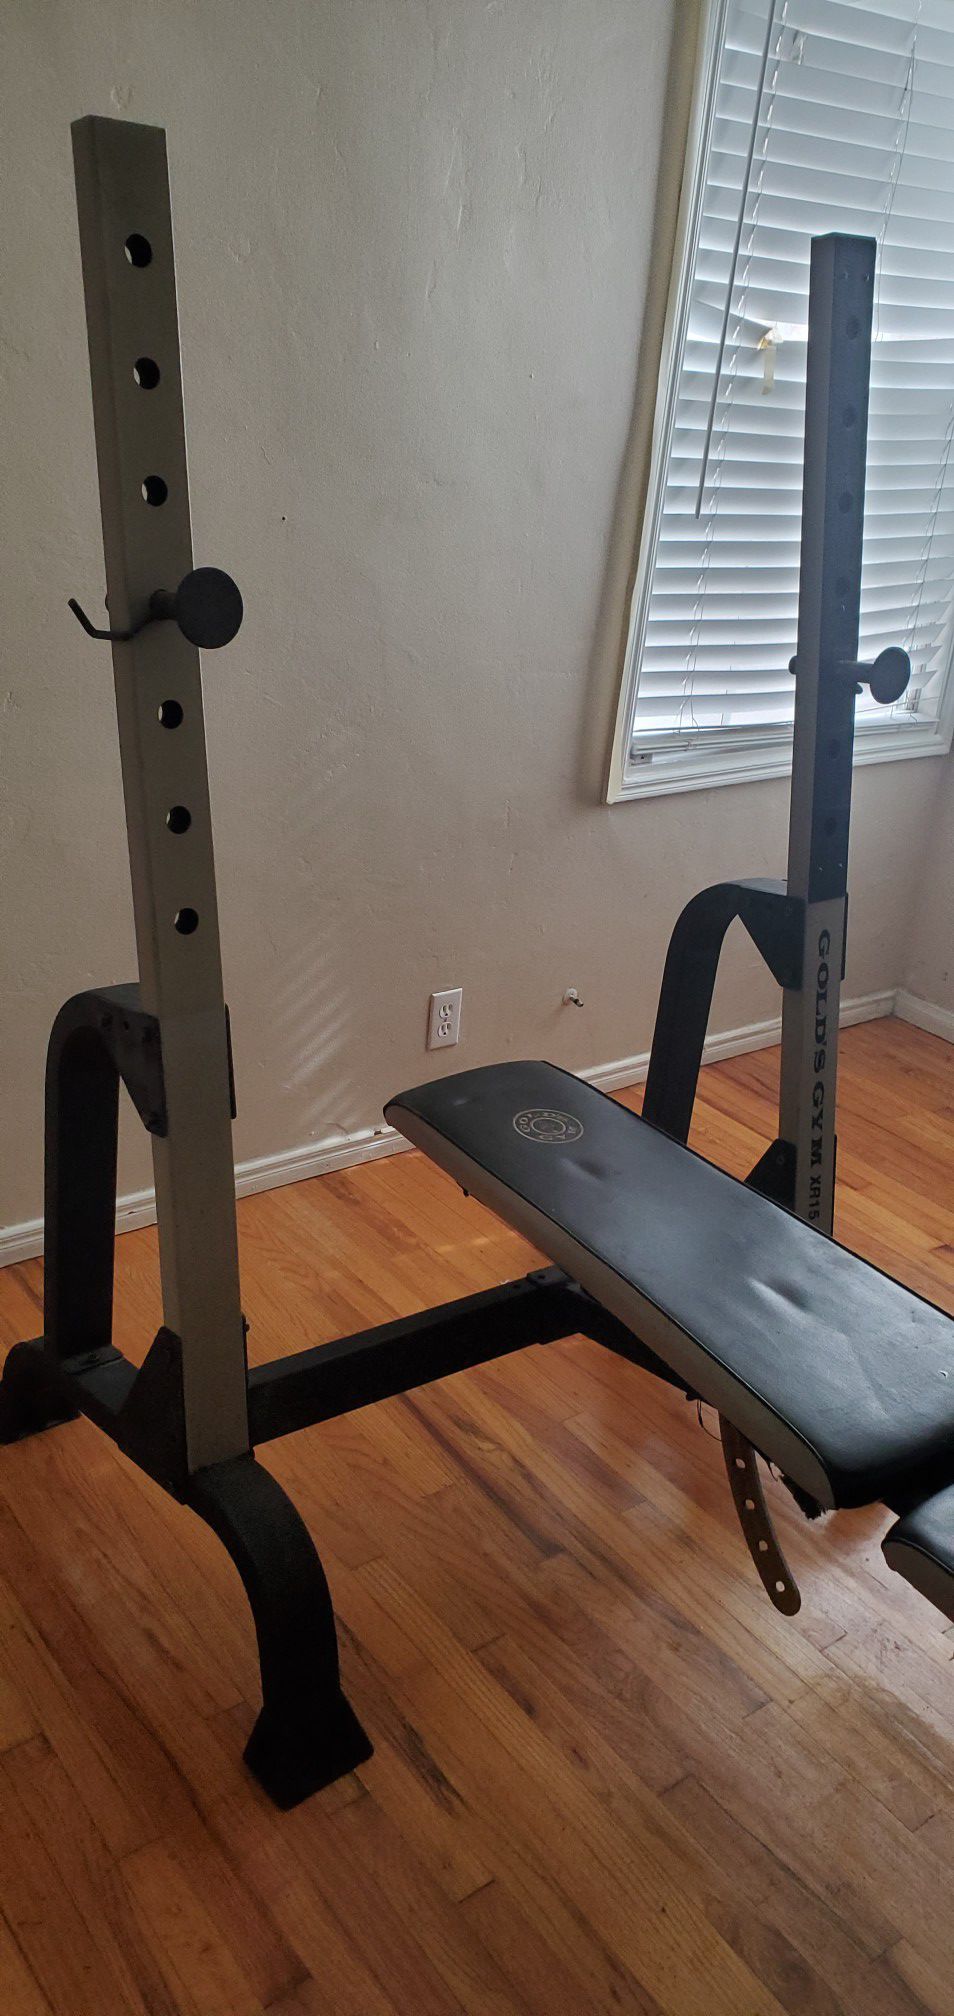 Weight Bench/Gym Equipment Set